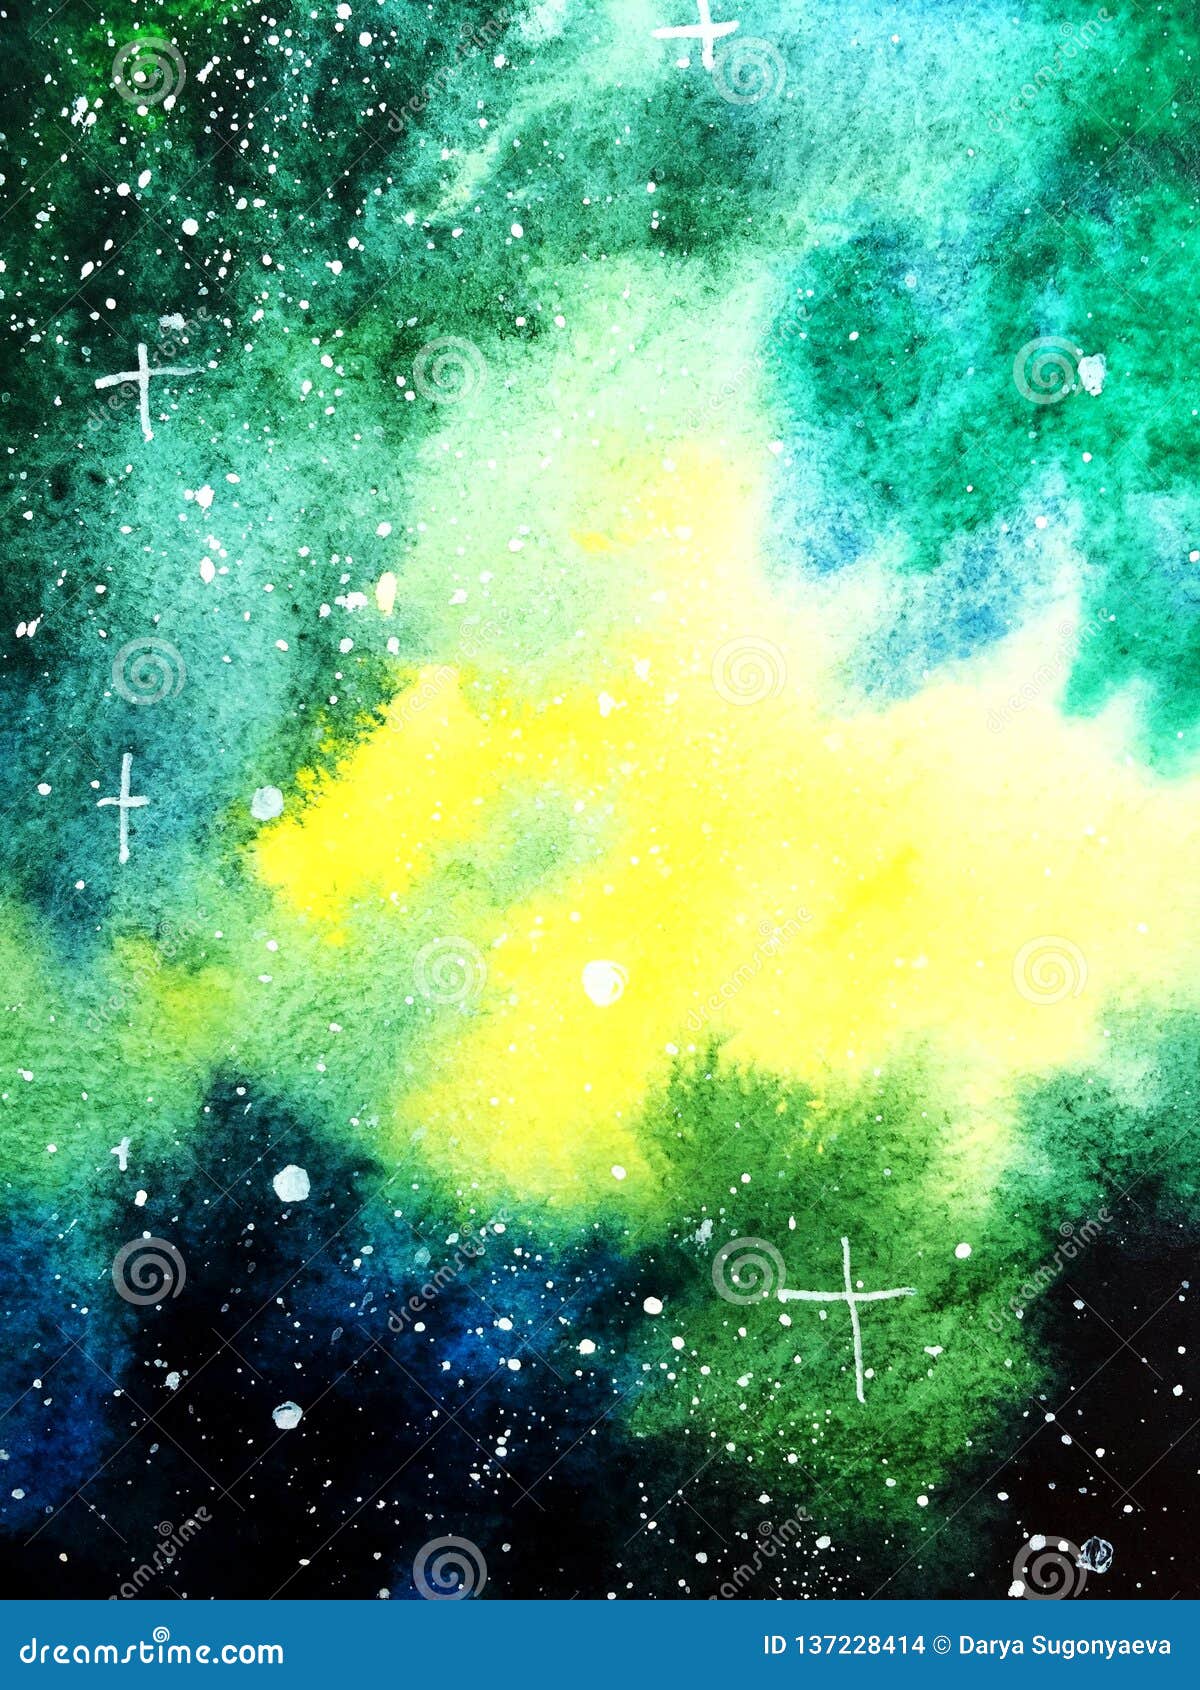 Galaxy Yellow Spot Background Watercolor Stock Illustration